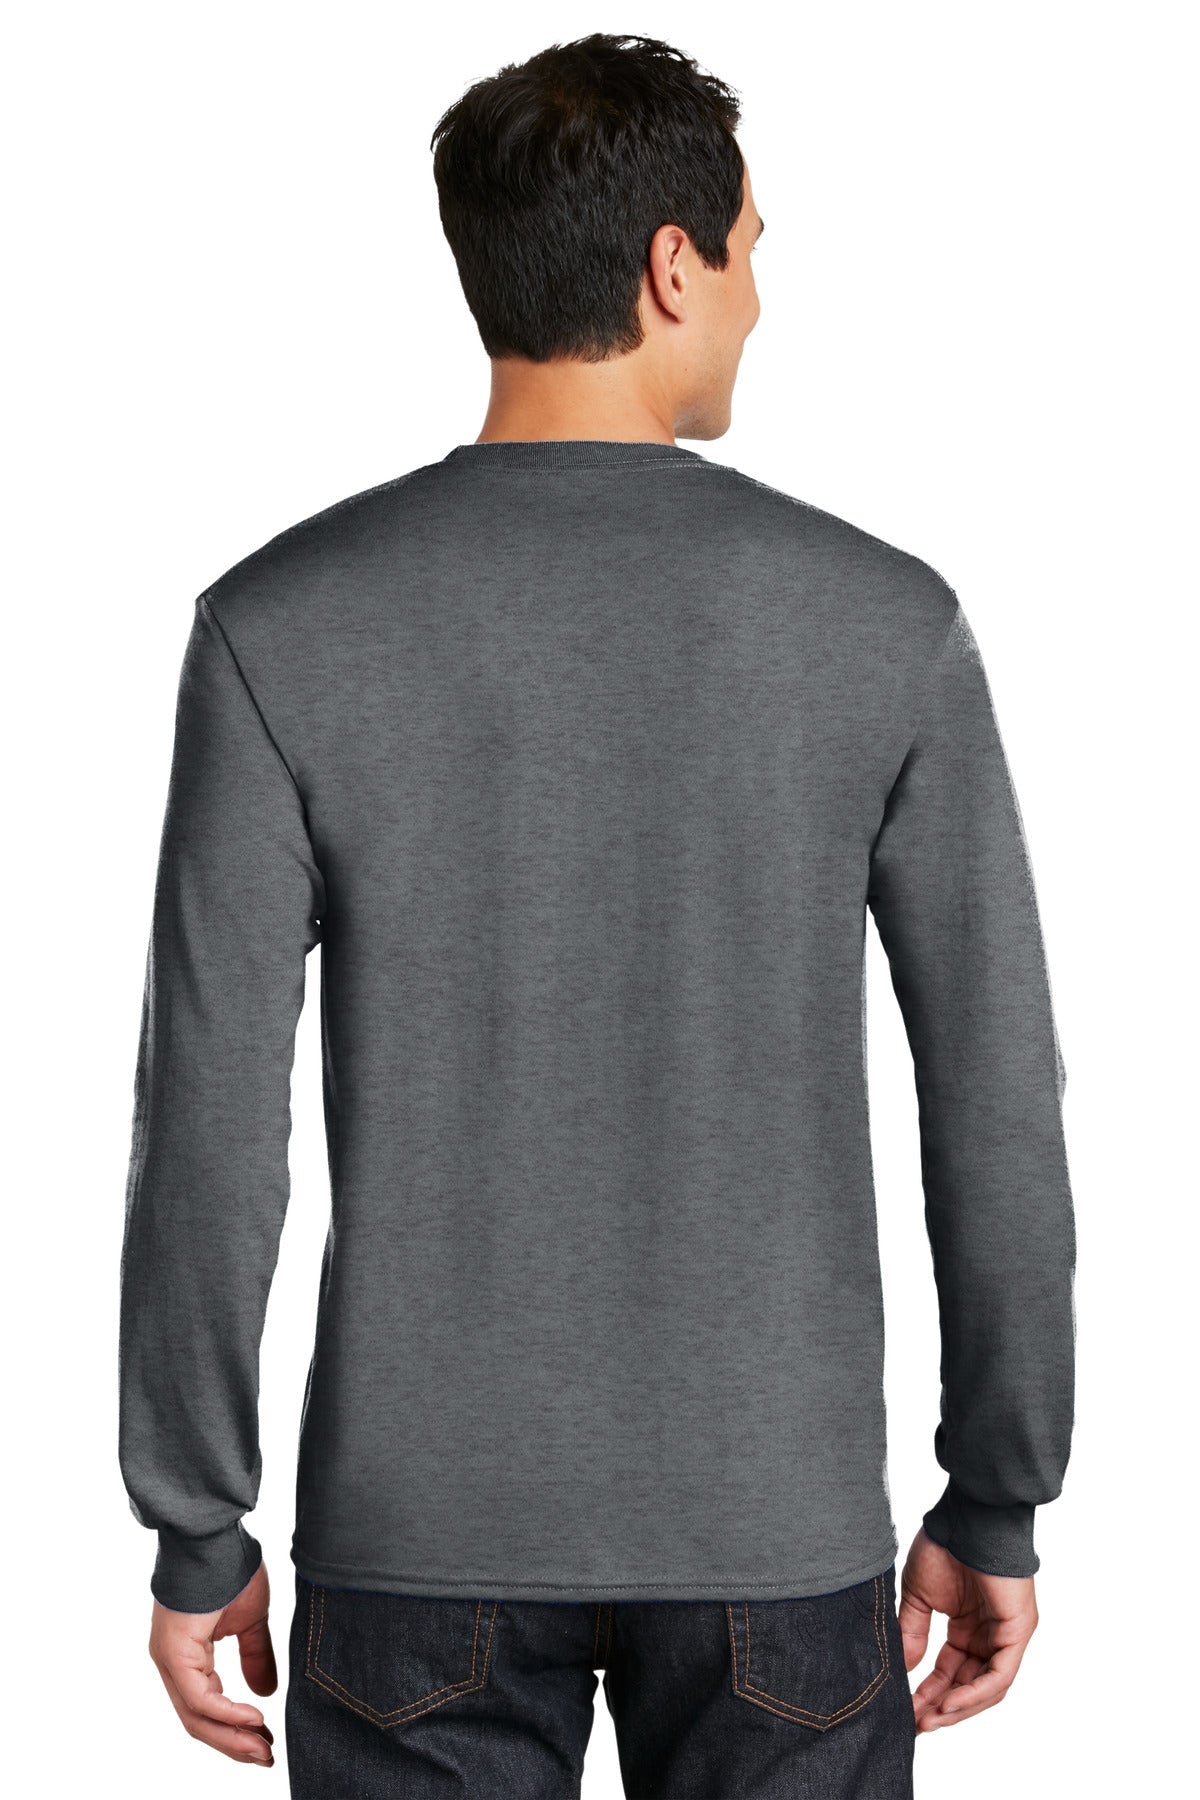 Gildan® - DryBlend® 50 Cotton/50 Poly Long Sleeve T-Shirt. 8400 [Dark Heather] - DFW Impression